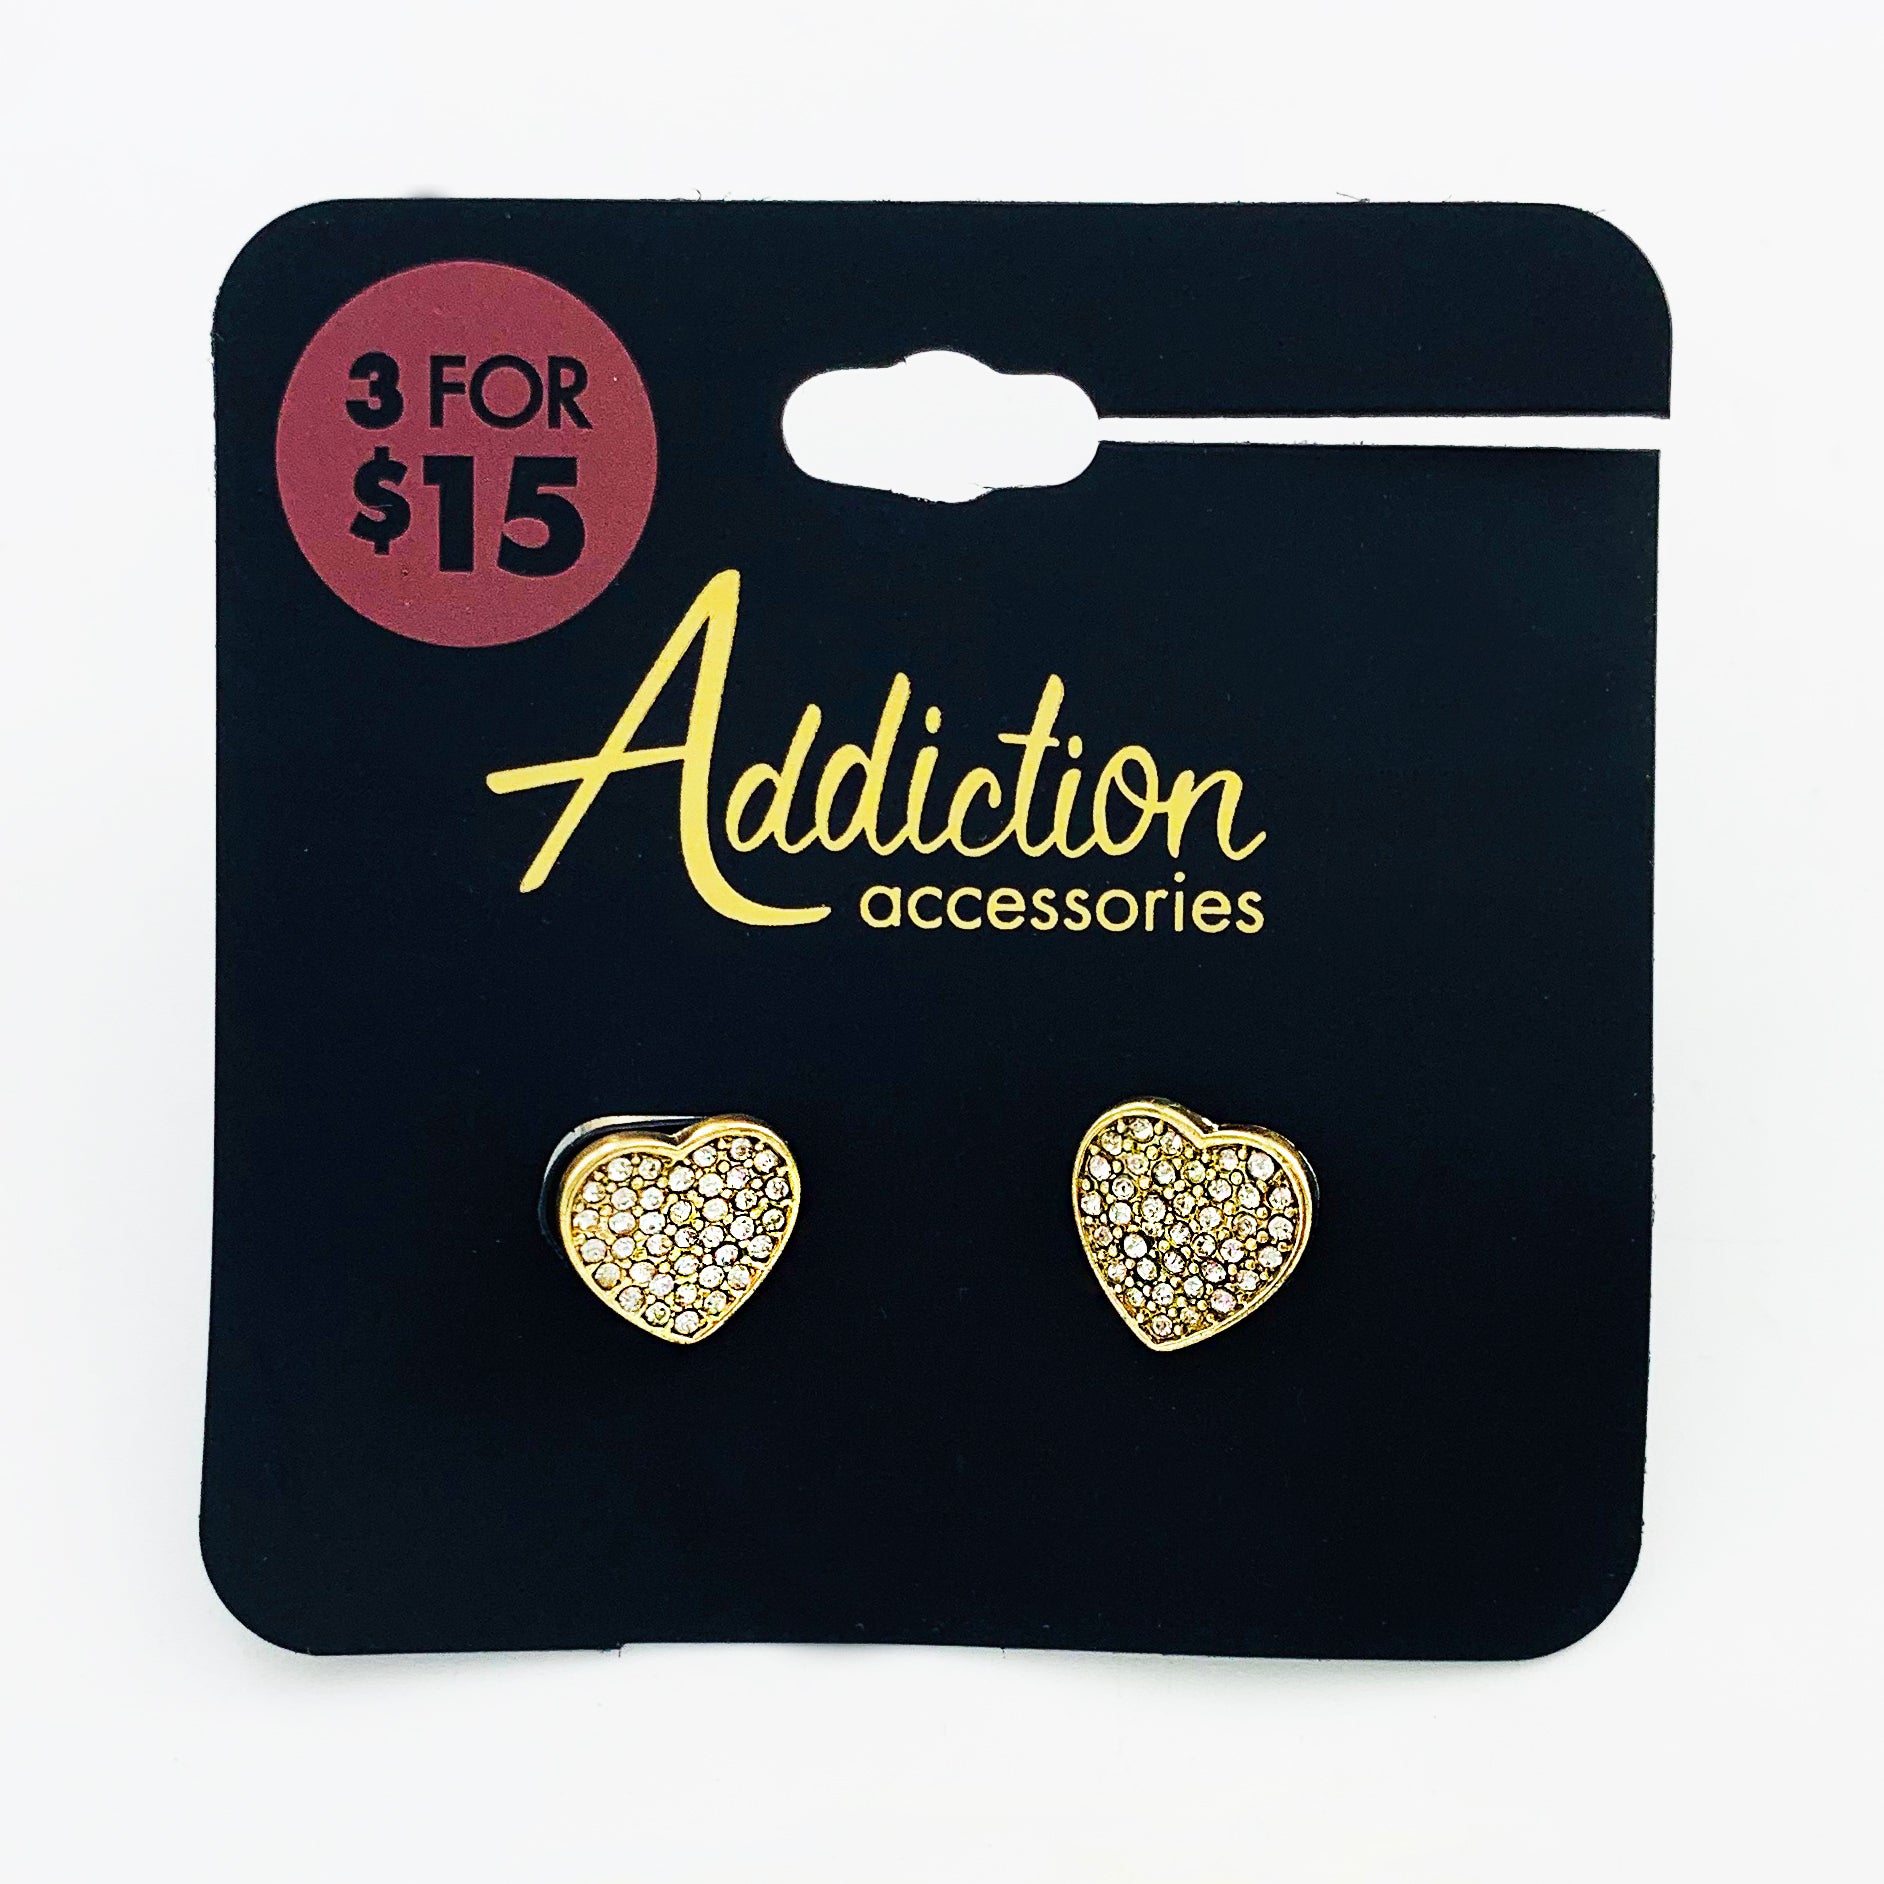 Gold diamante-encrusted heart earrings